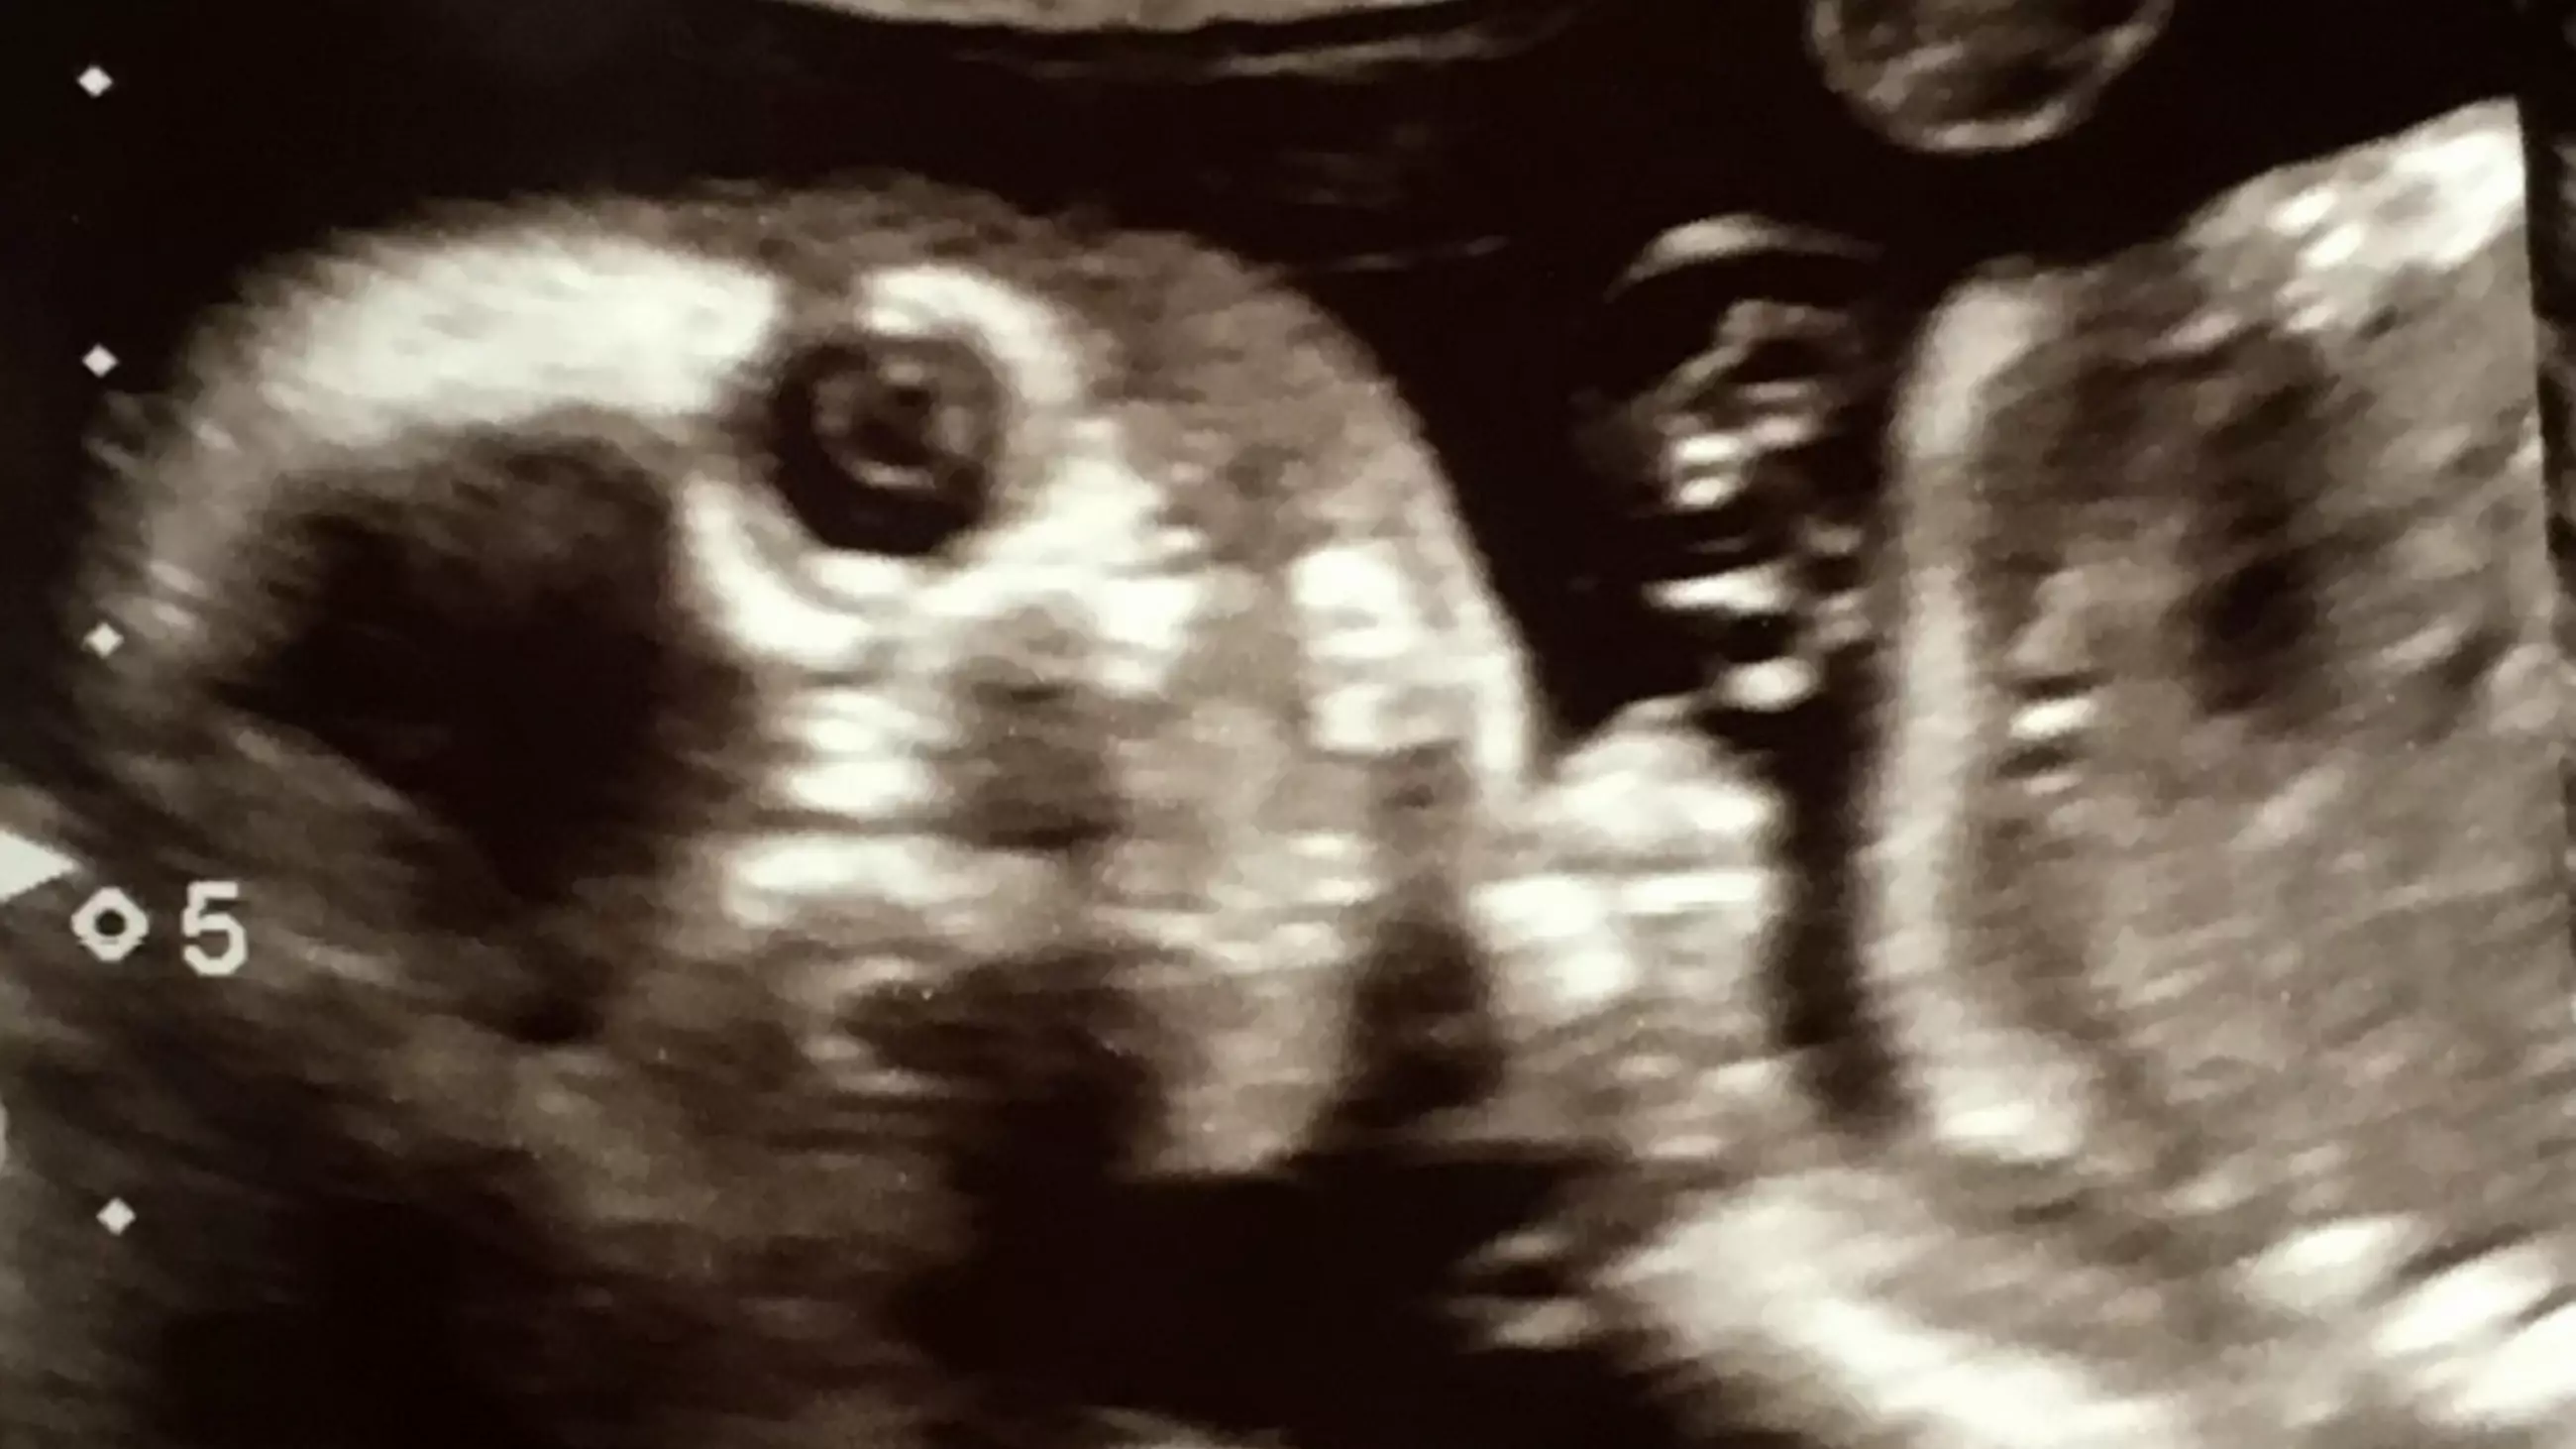 Mum Shocked As Baby Stares At Camera In 'Creepy' 20-Week Scan